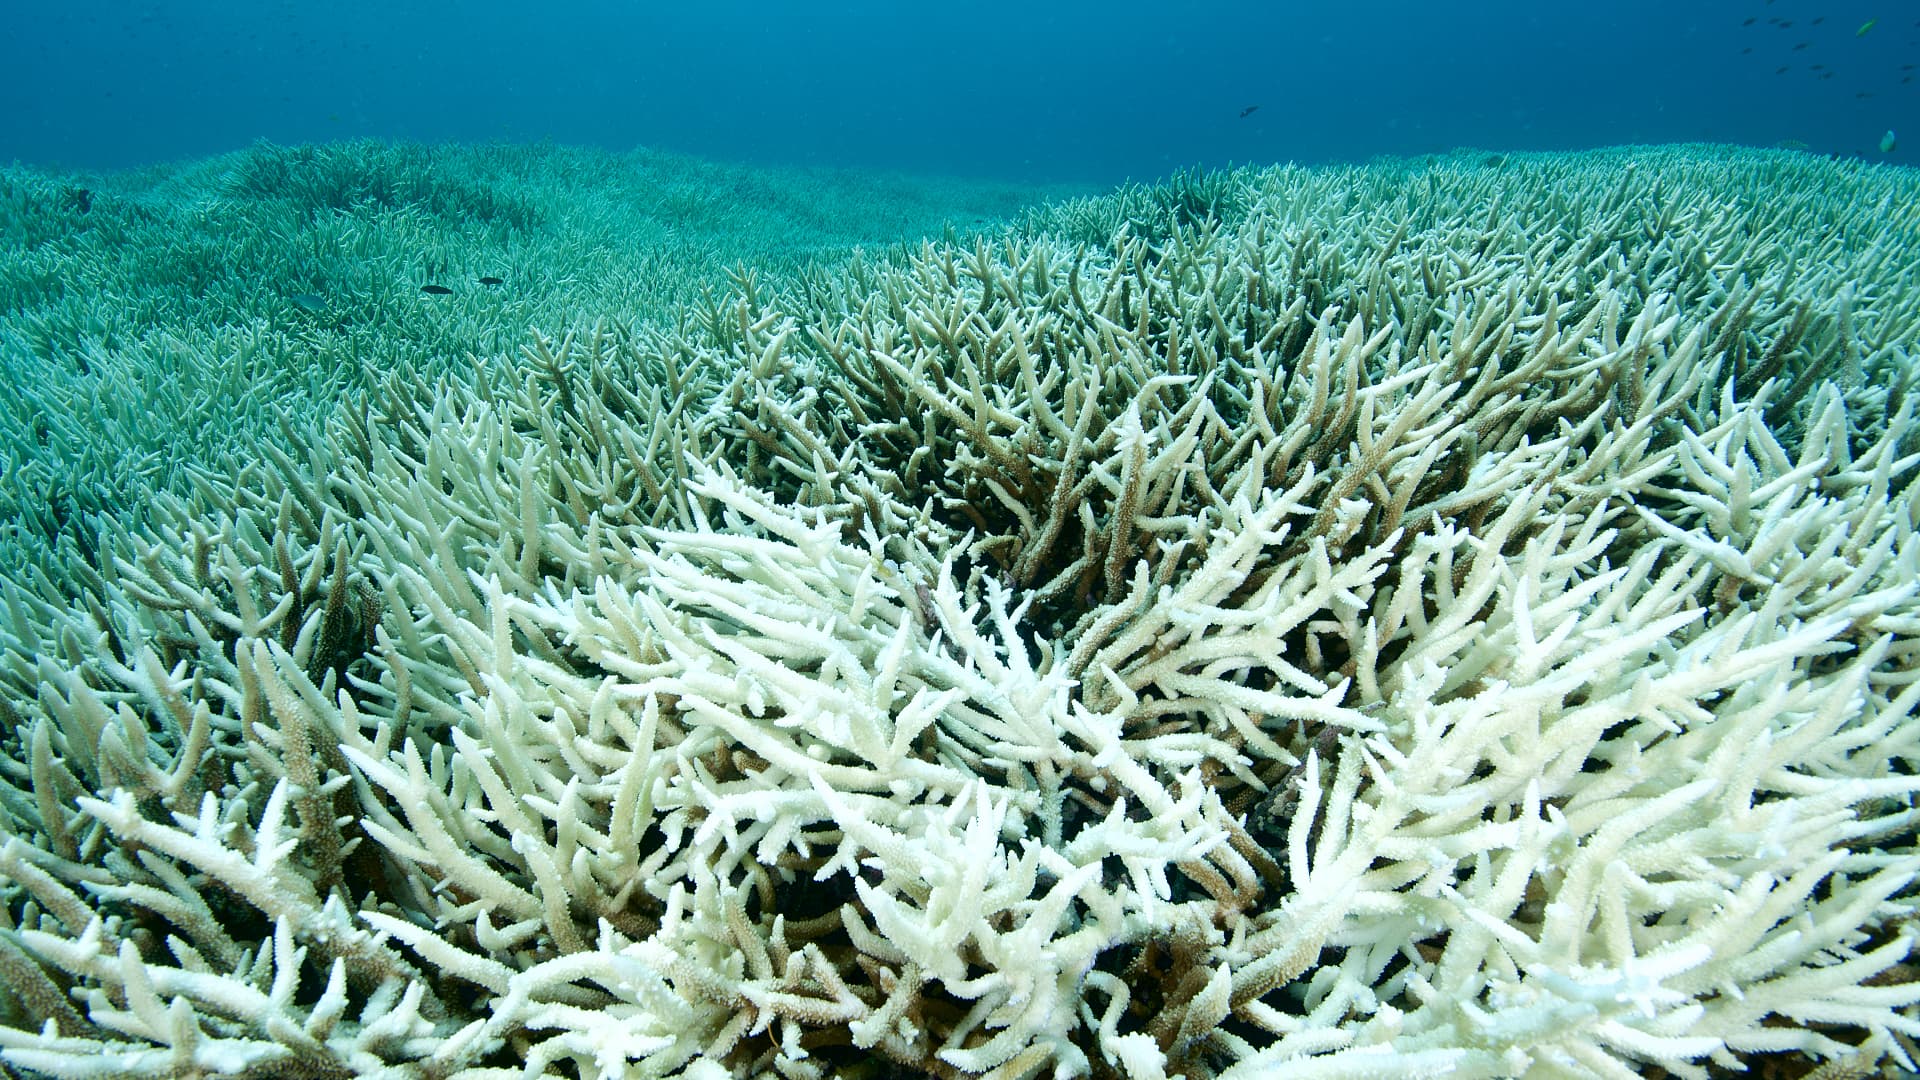 Oceans: The Great Barrier Reef has lost half of the reef